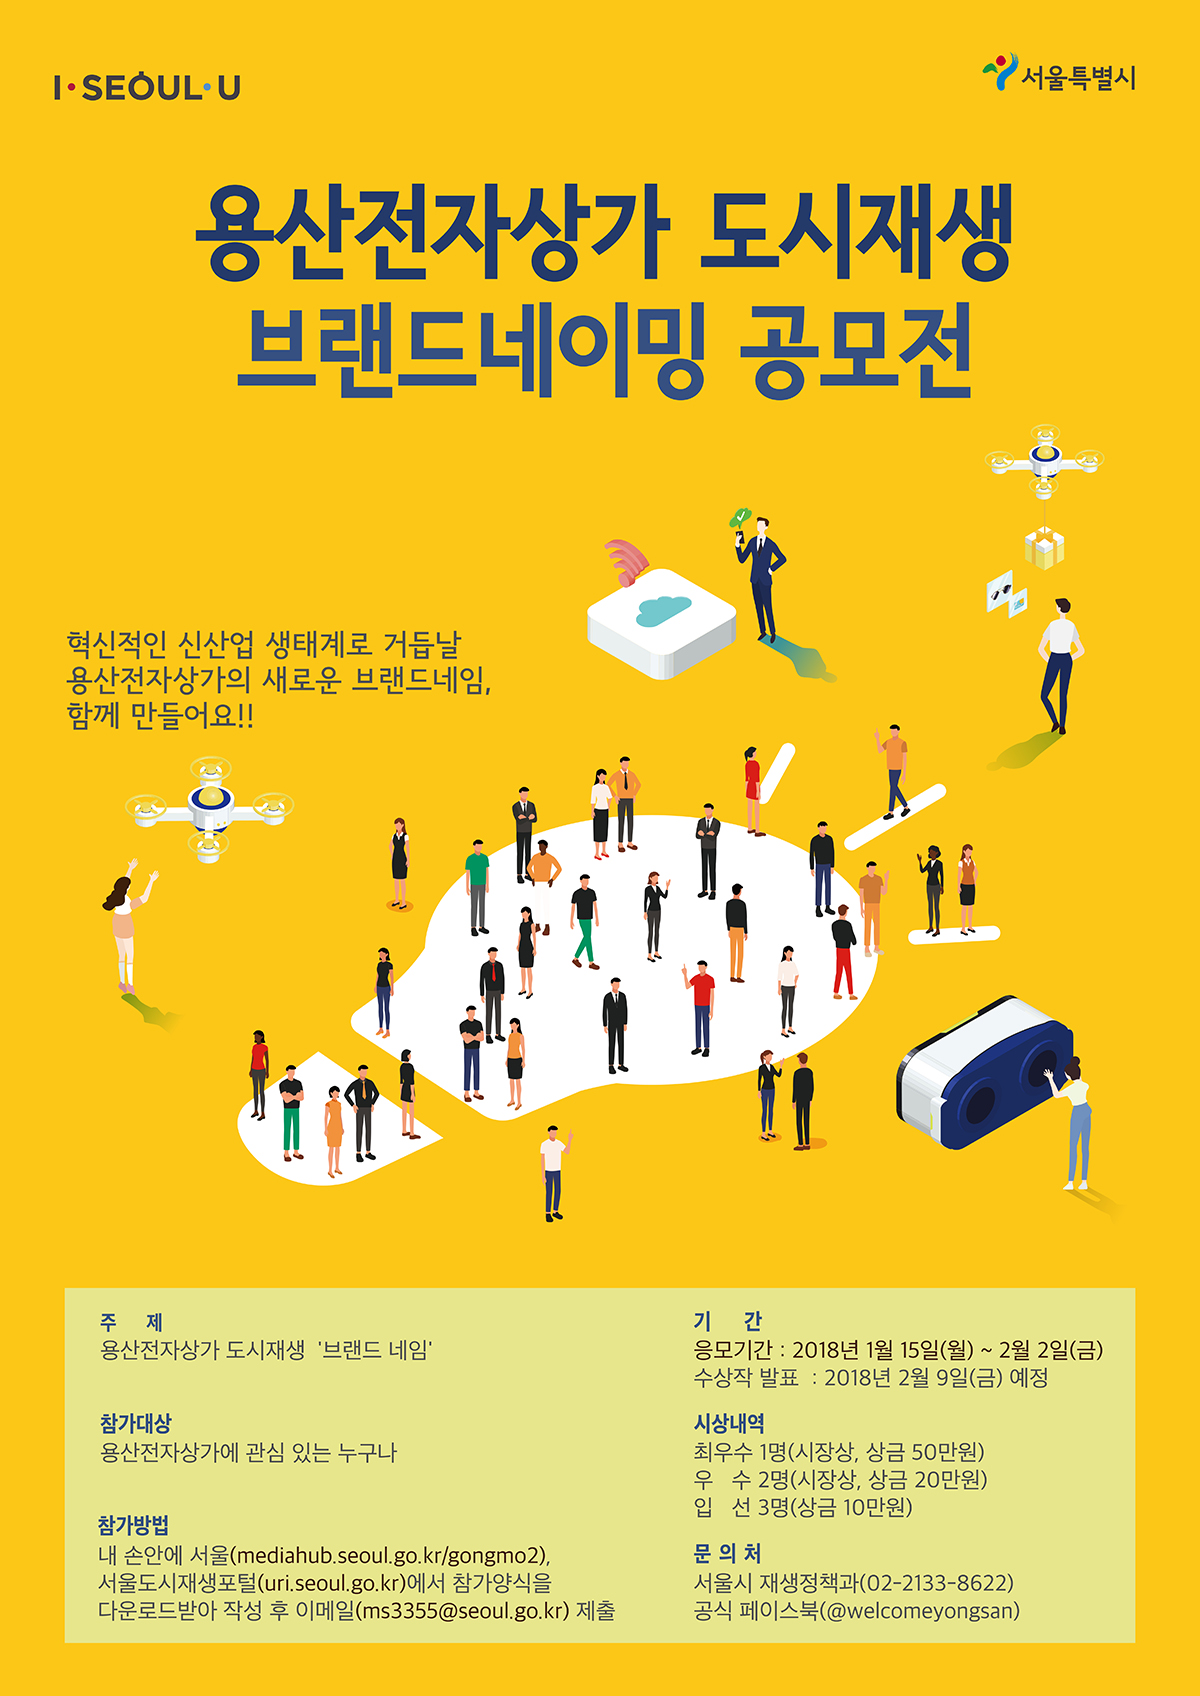 You are currently viewing 서울시, 용산전자상가의 새로운 도약 위한 시민 아이디어 공모